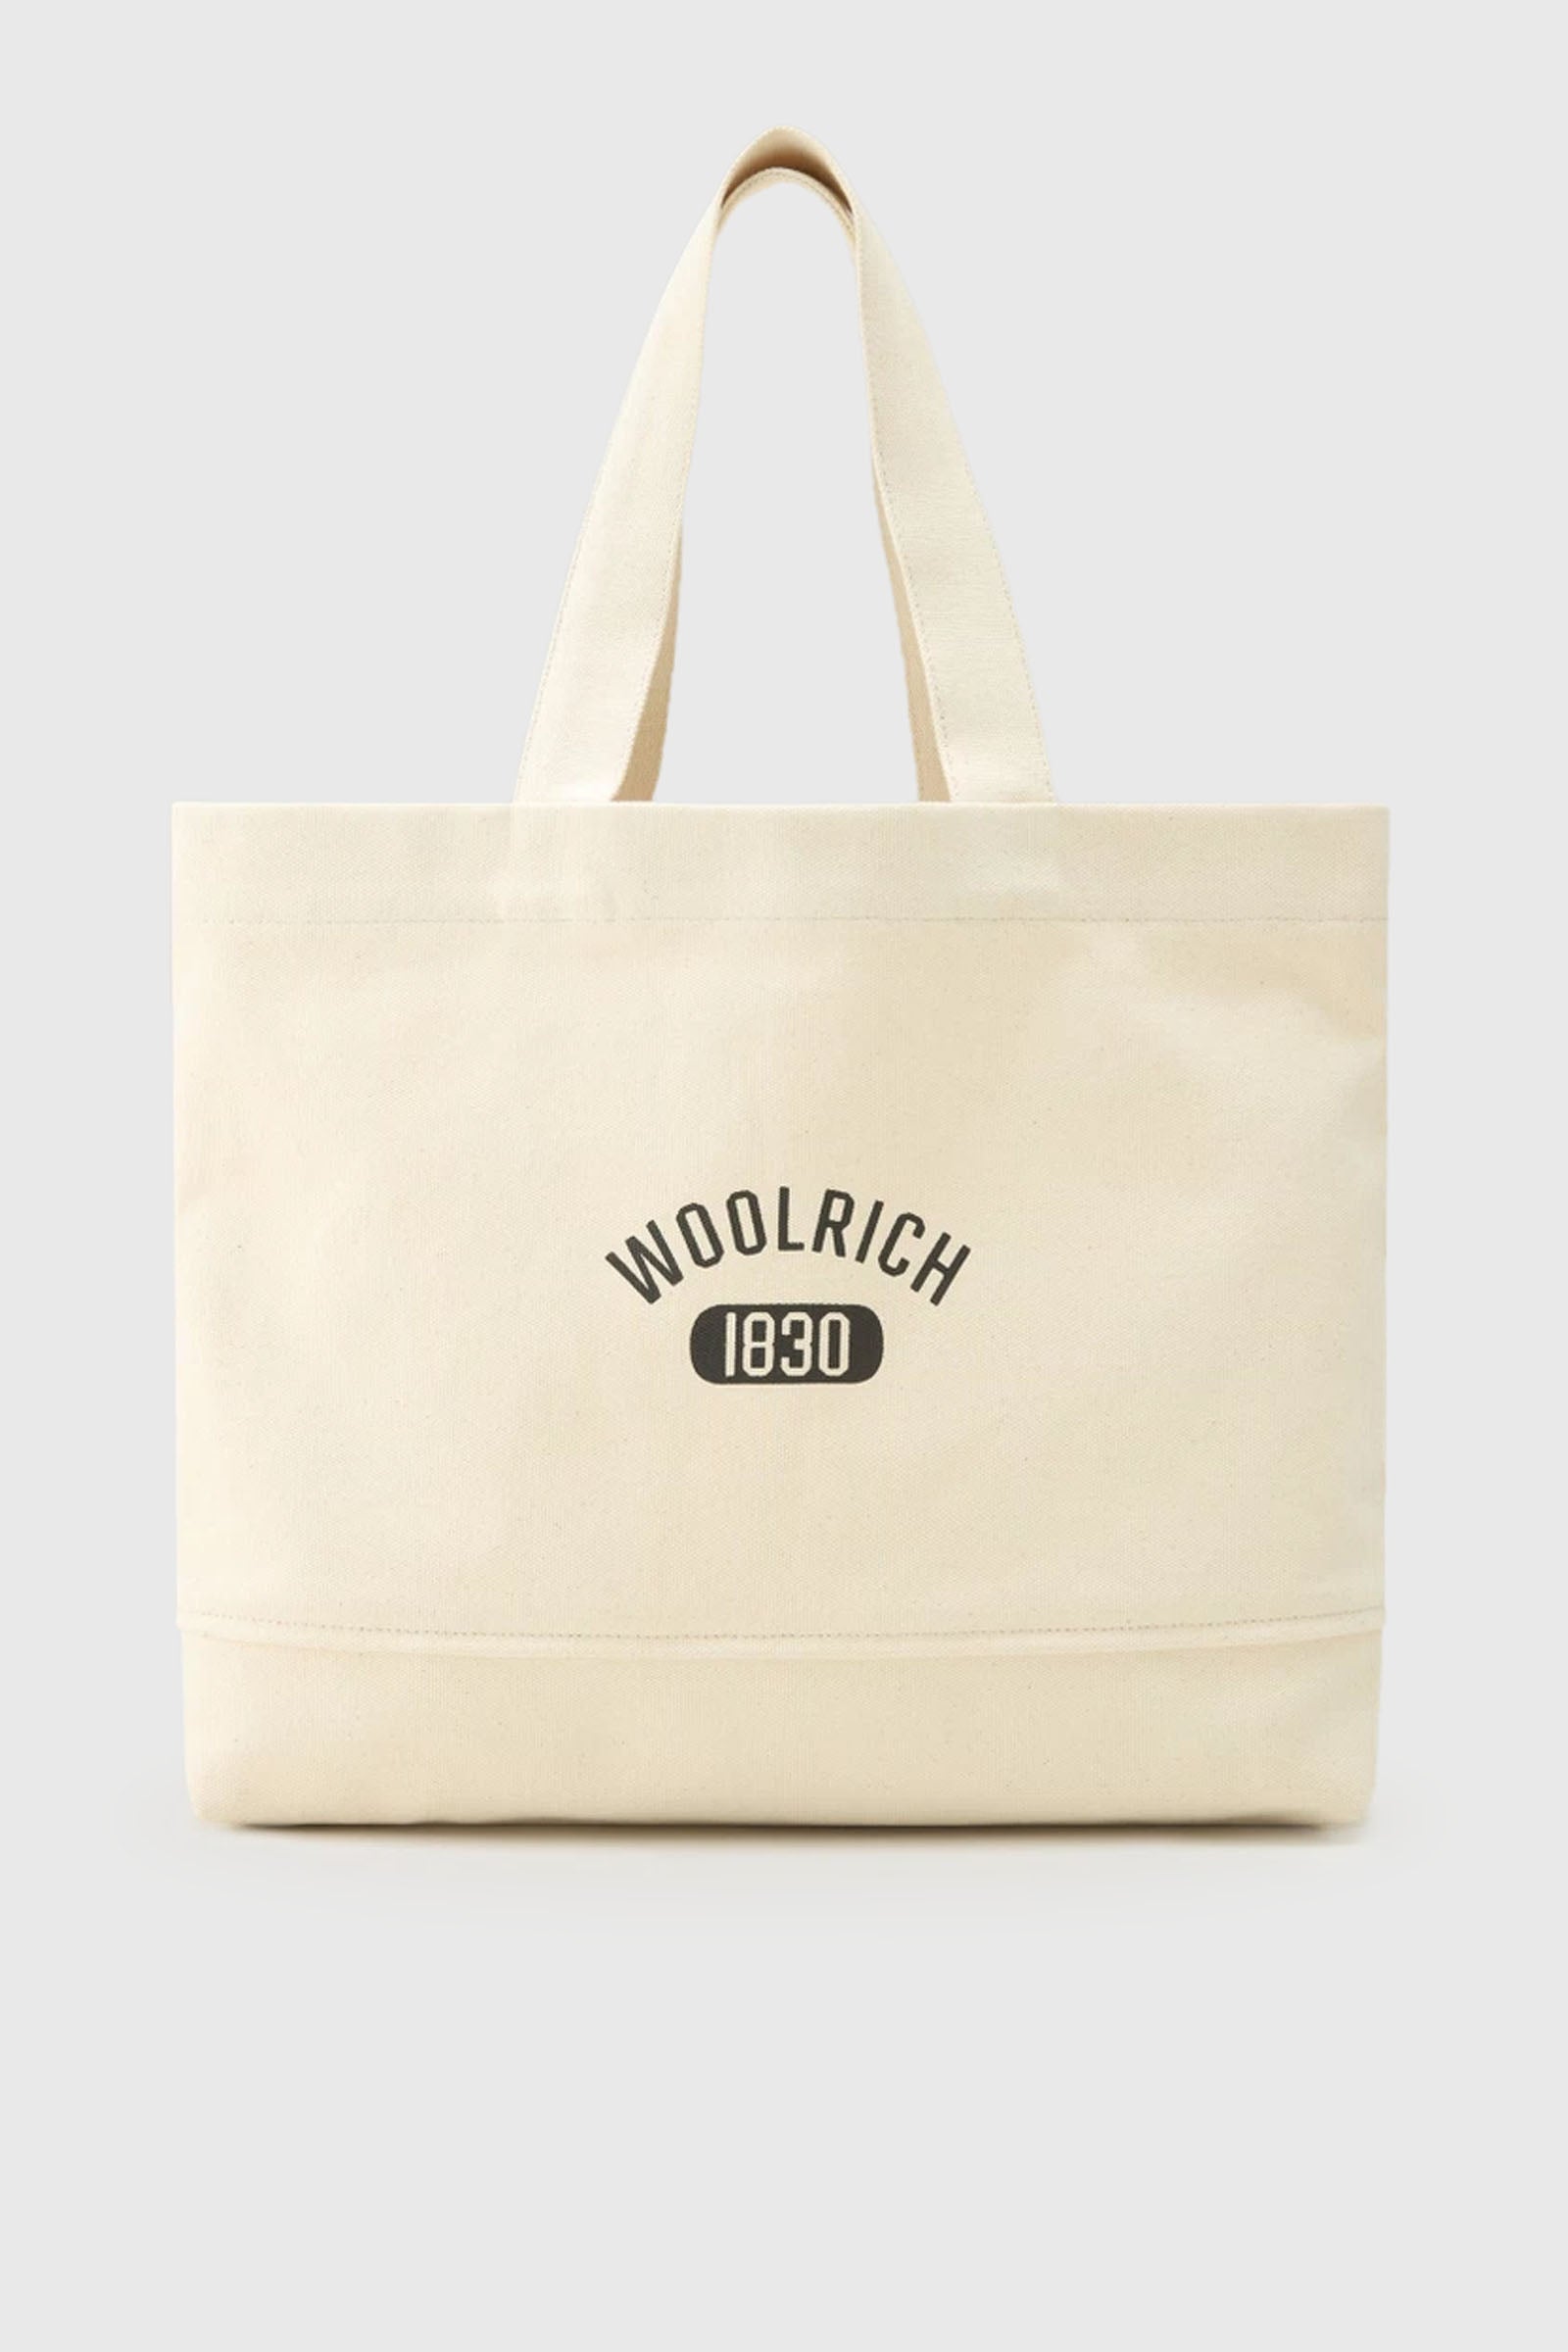 Woolrich Tote Bag Ecru Cotton - 1